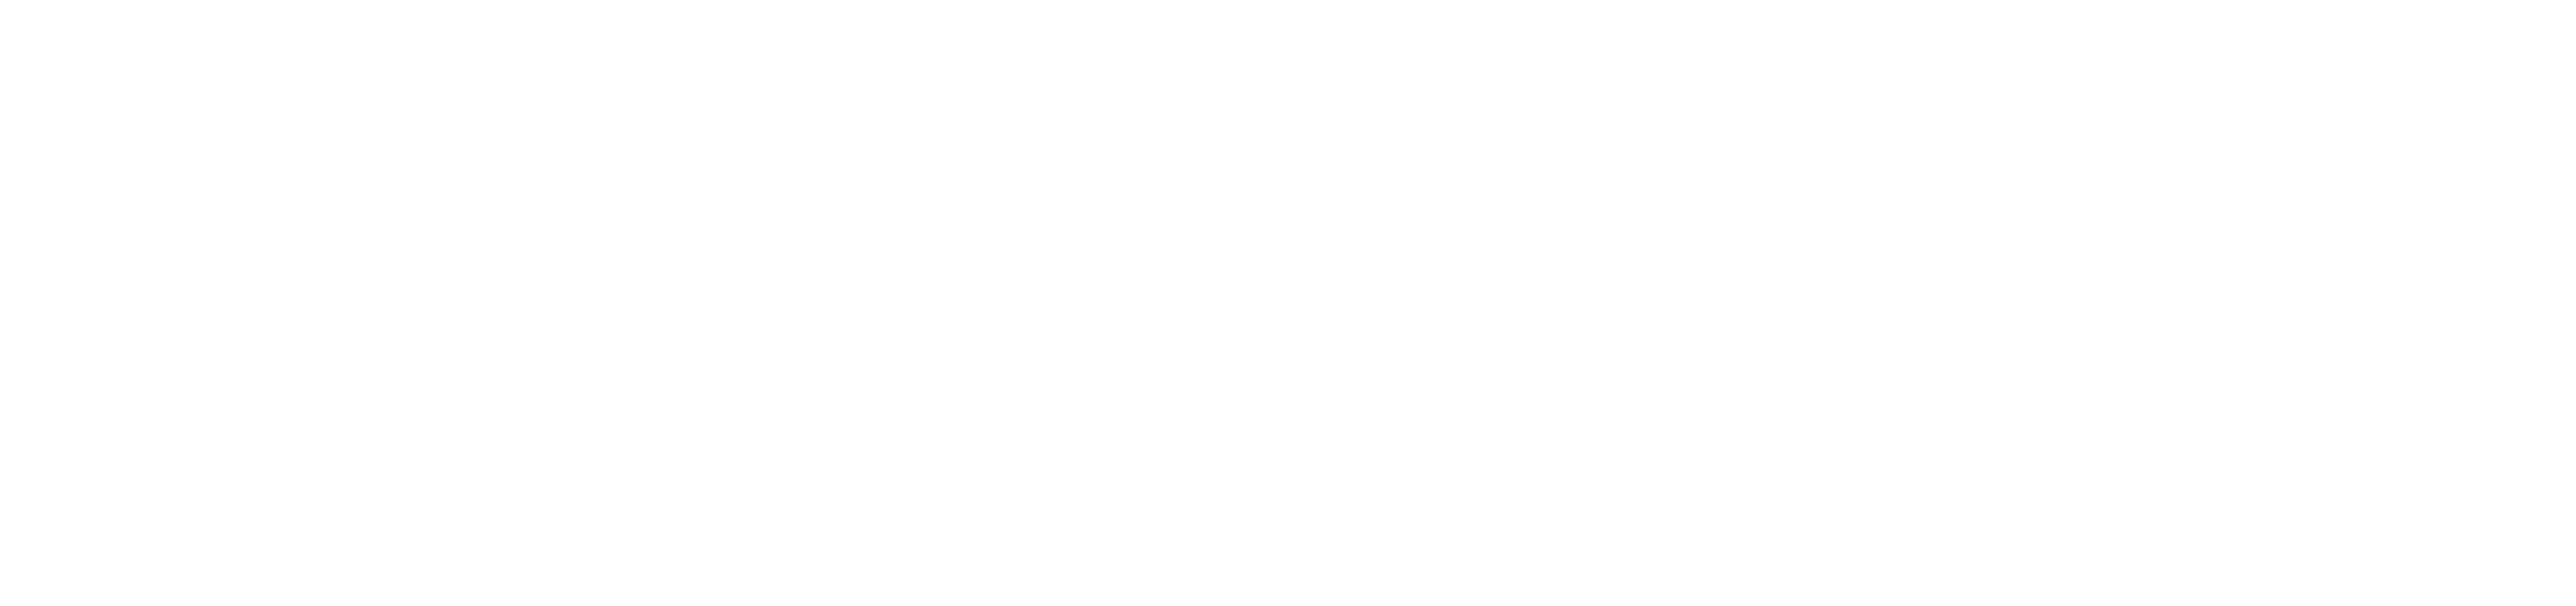 Sietske-Scholten-Logo-wit.png